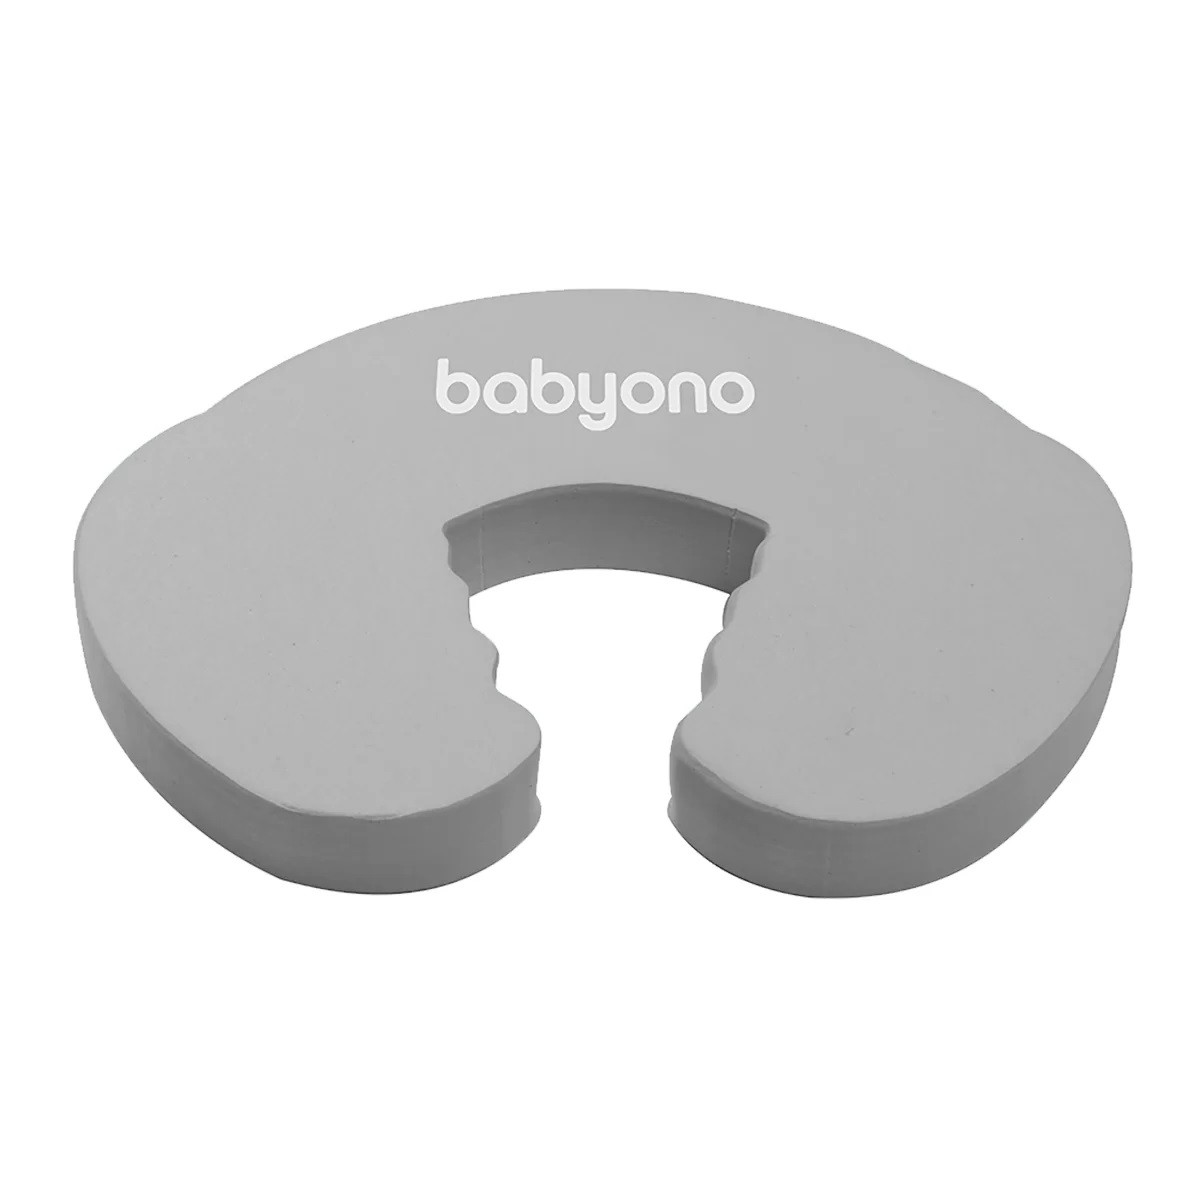 Блокатор двери BabyOno, серый (954) - фото 1